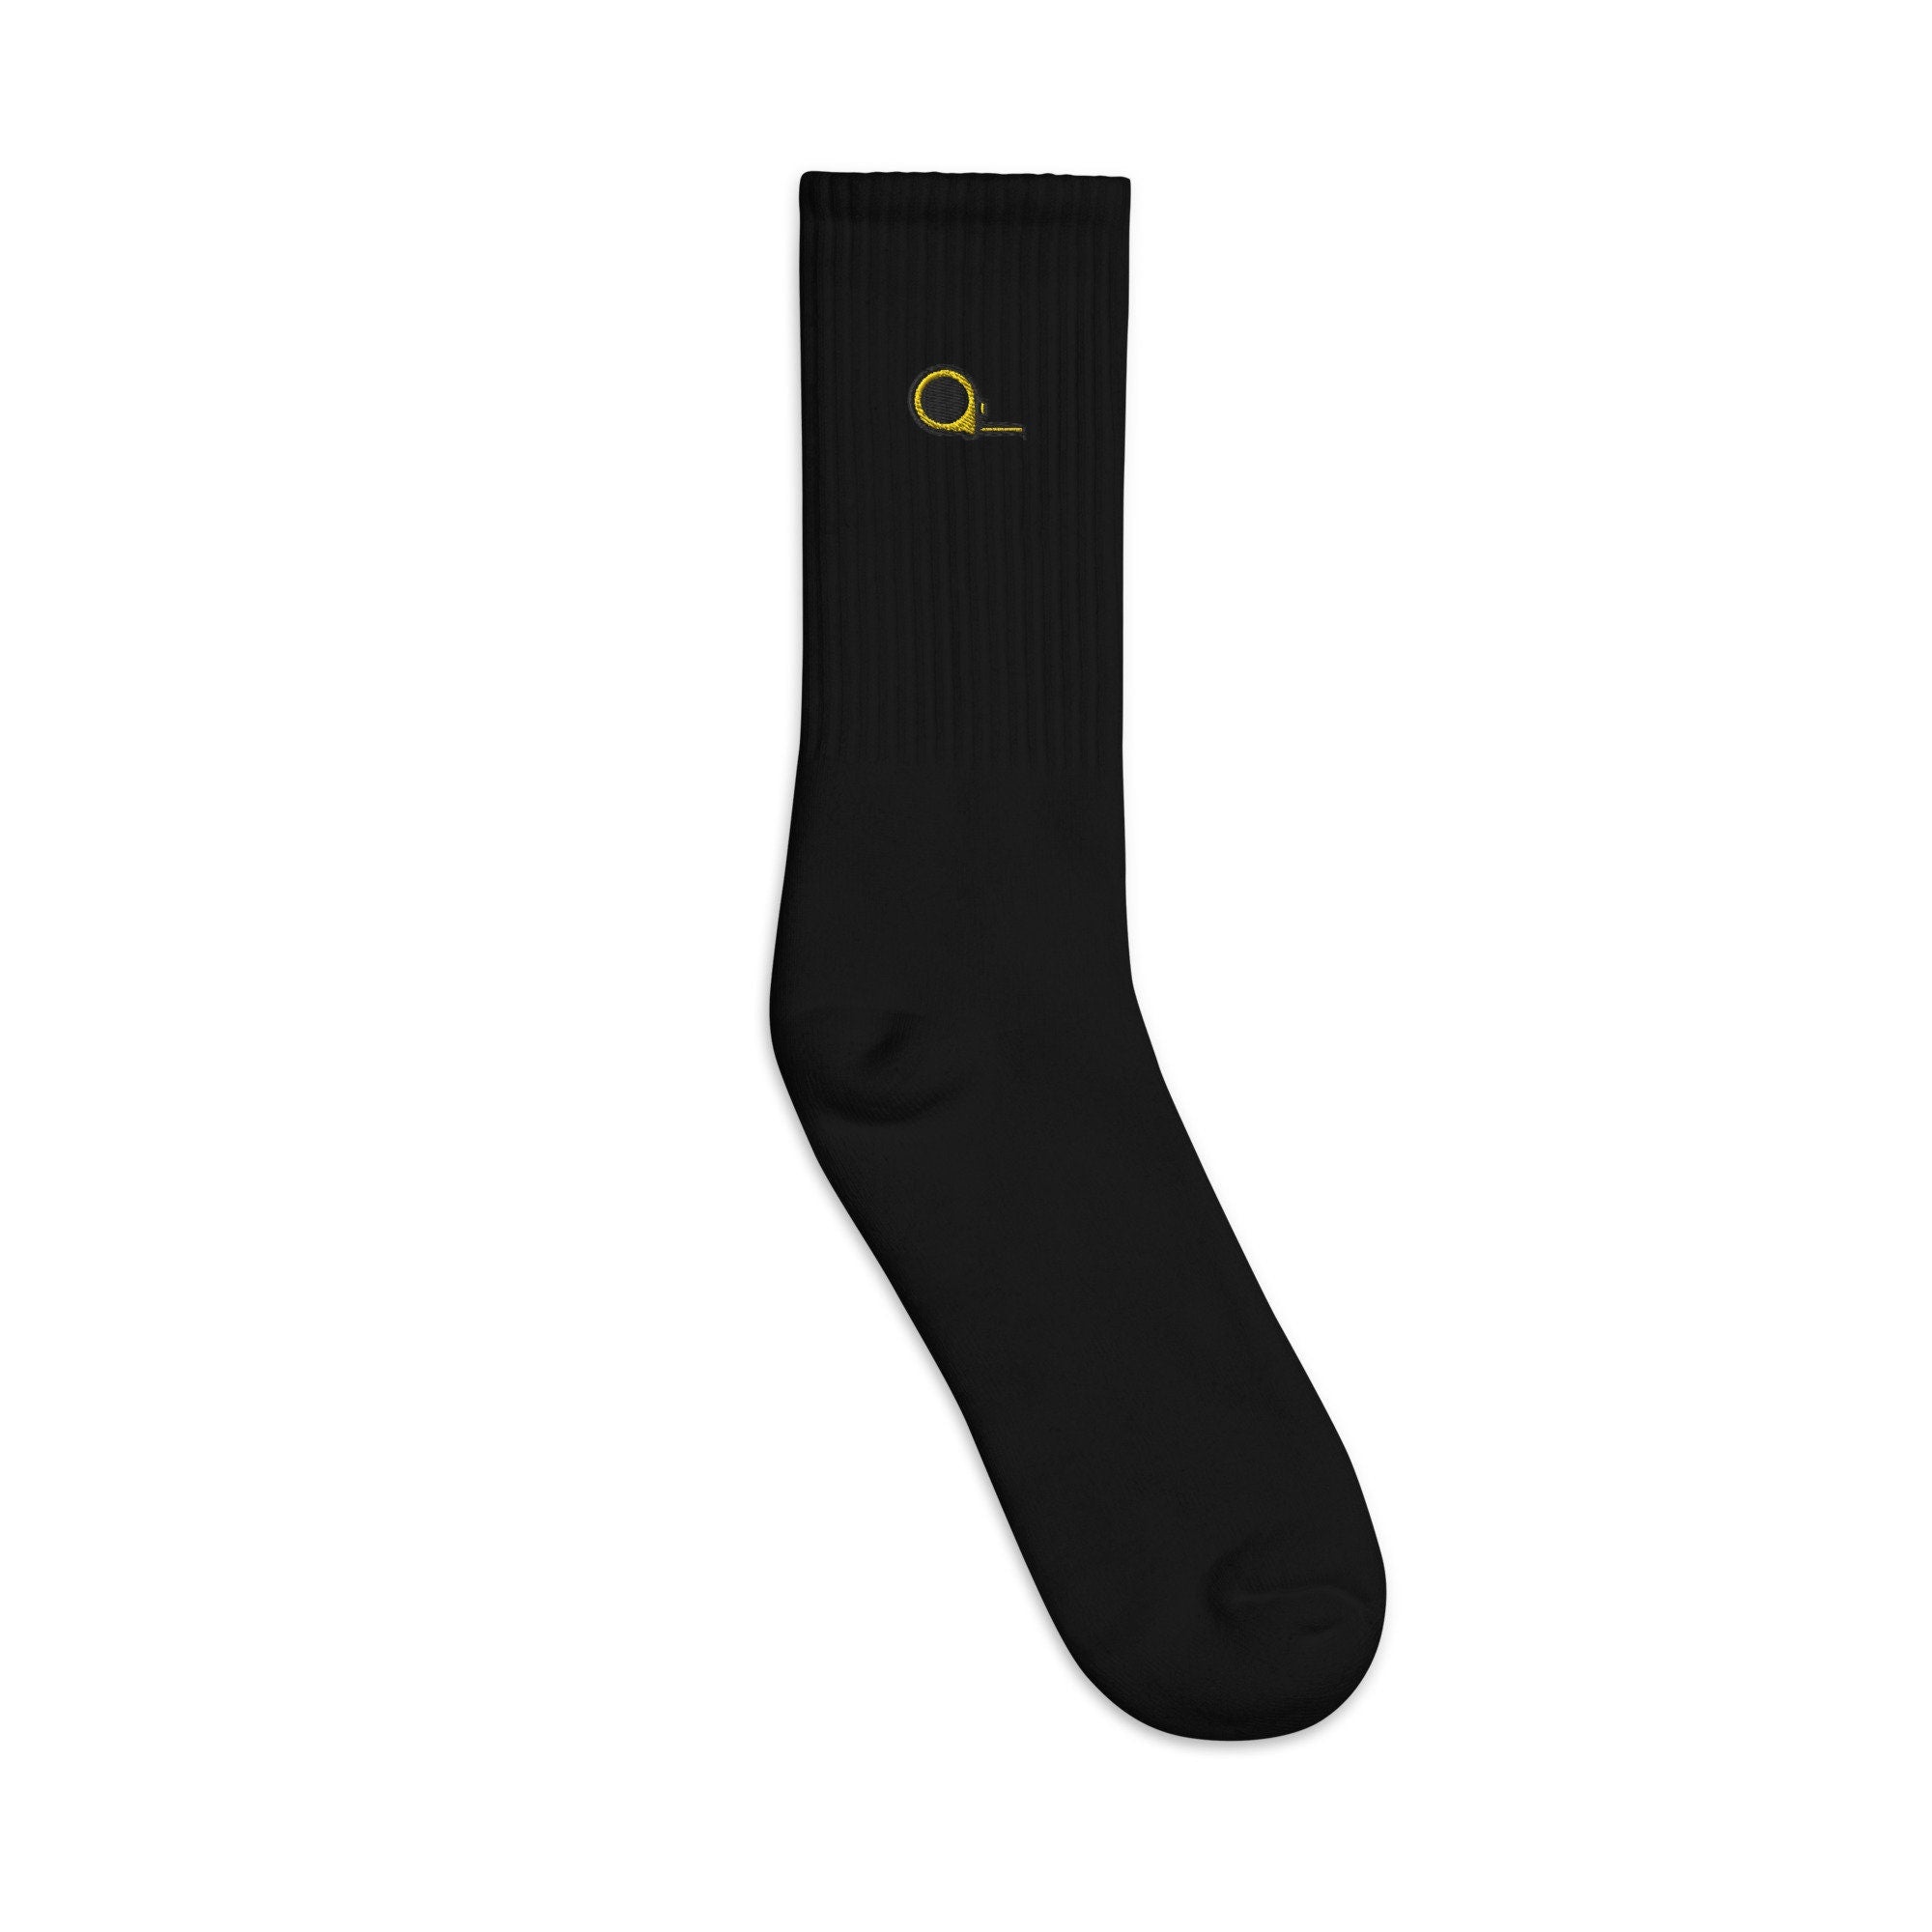 Tape Measure Embroidered Socks, Premium Embroidered Socks, Long Socks Gift - Multiple Colors